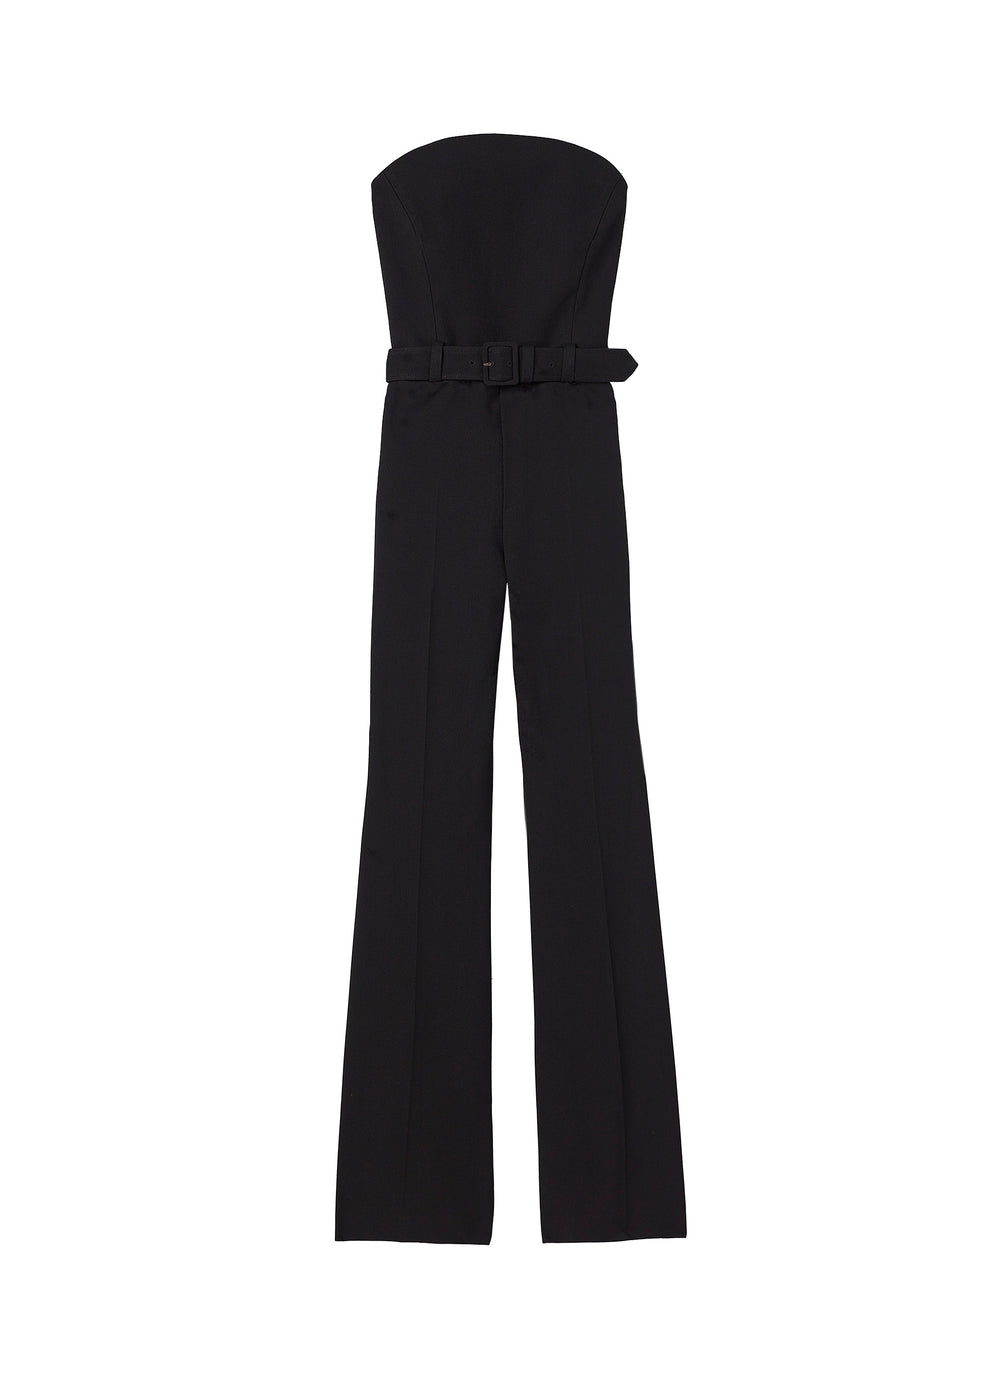 flatlay of black strapless jumpsuit